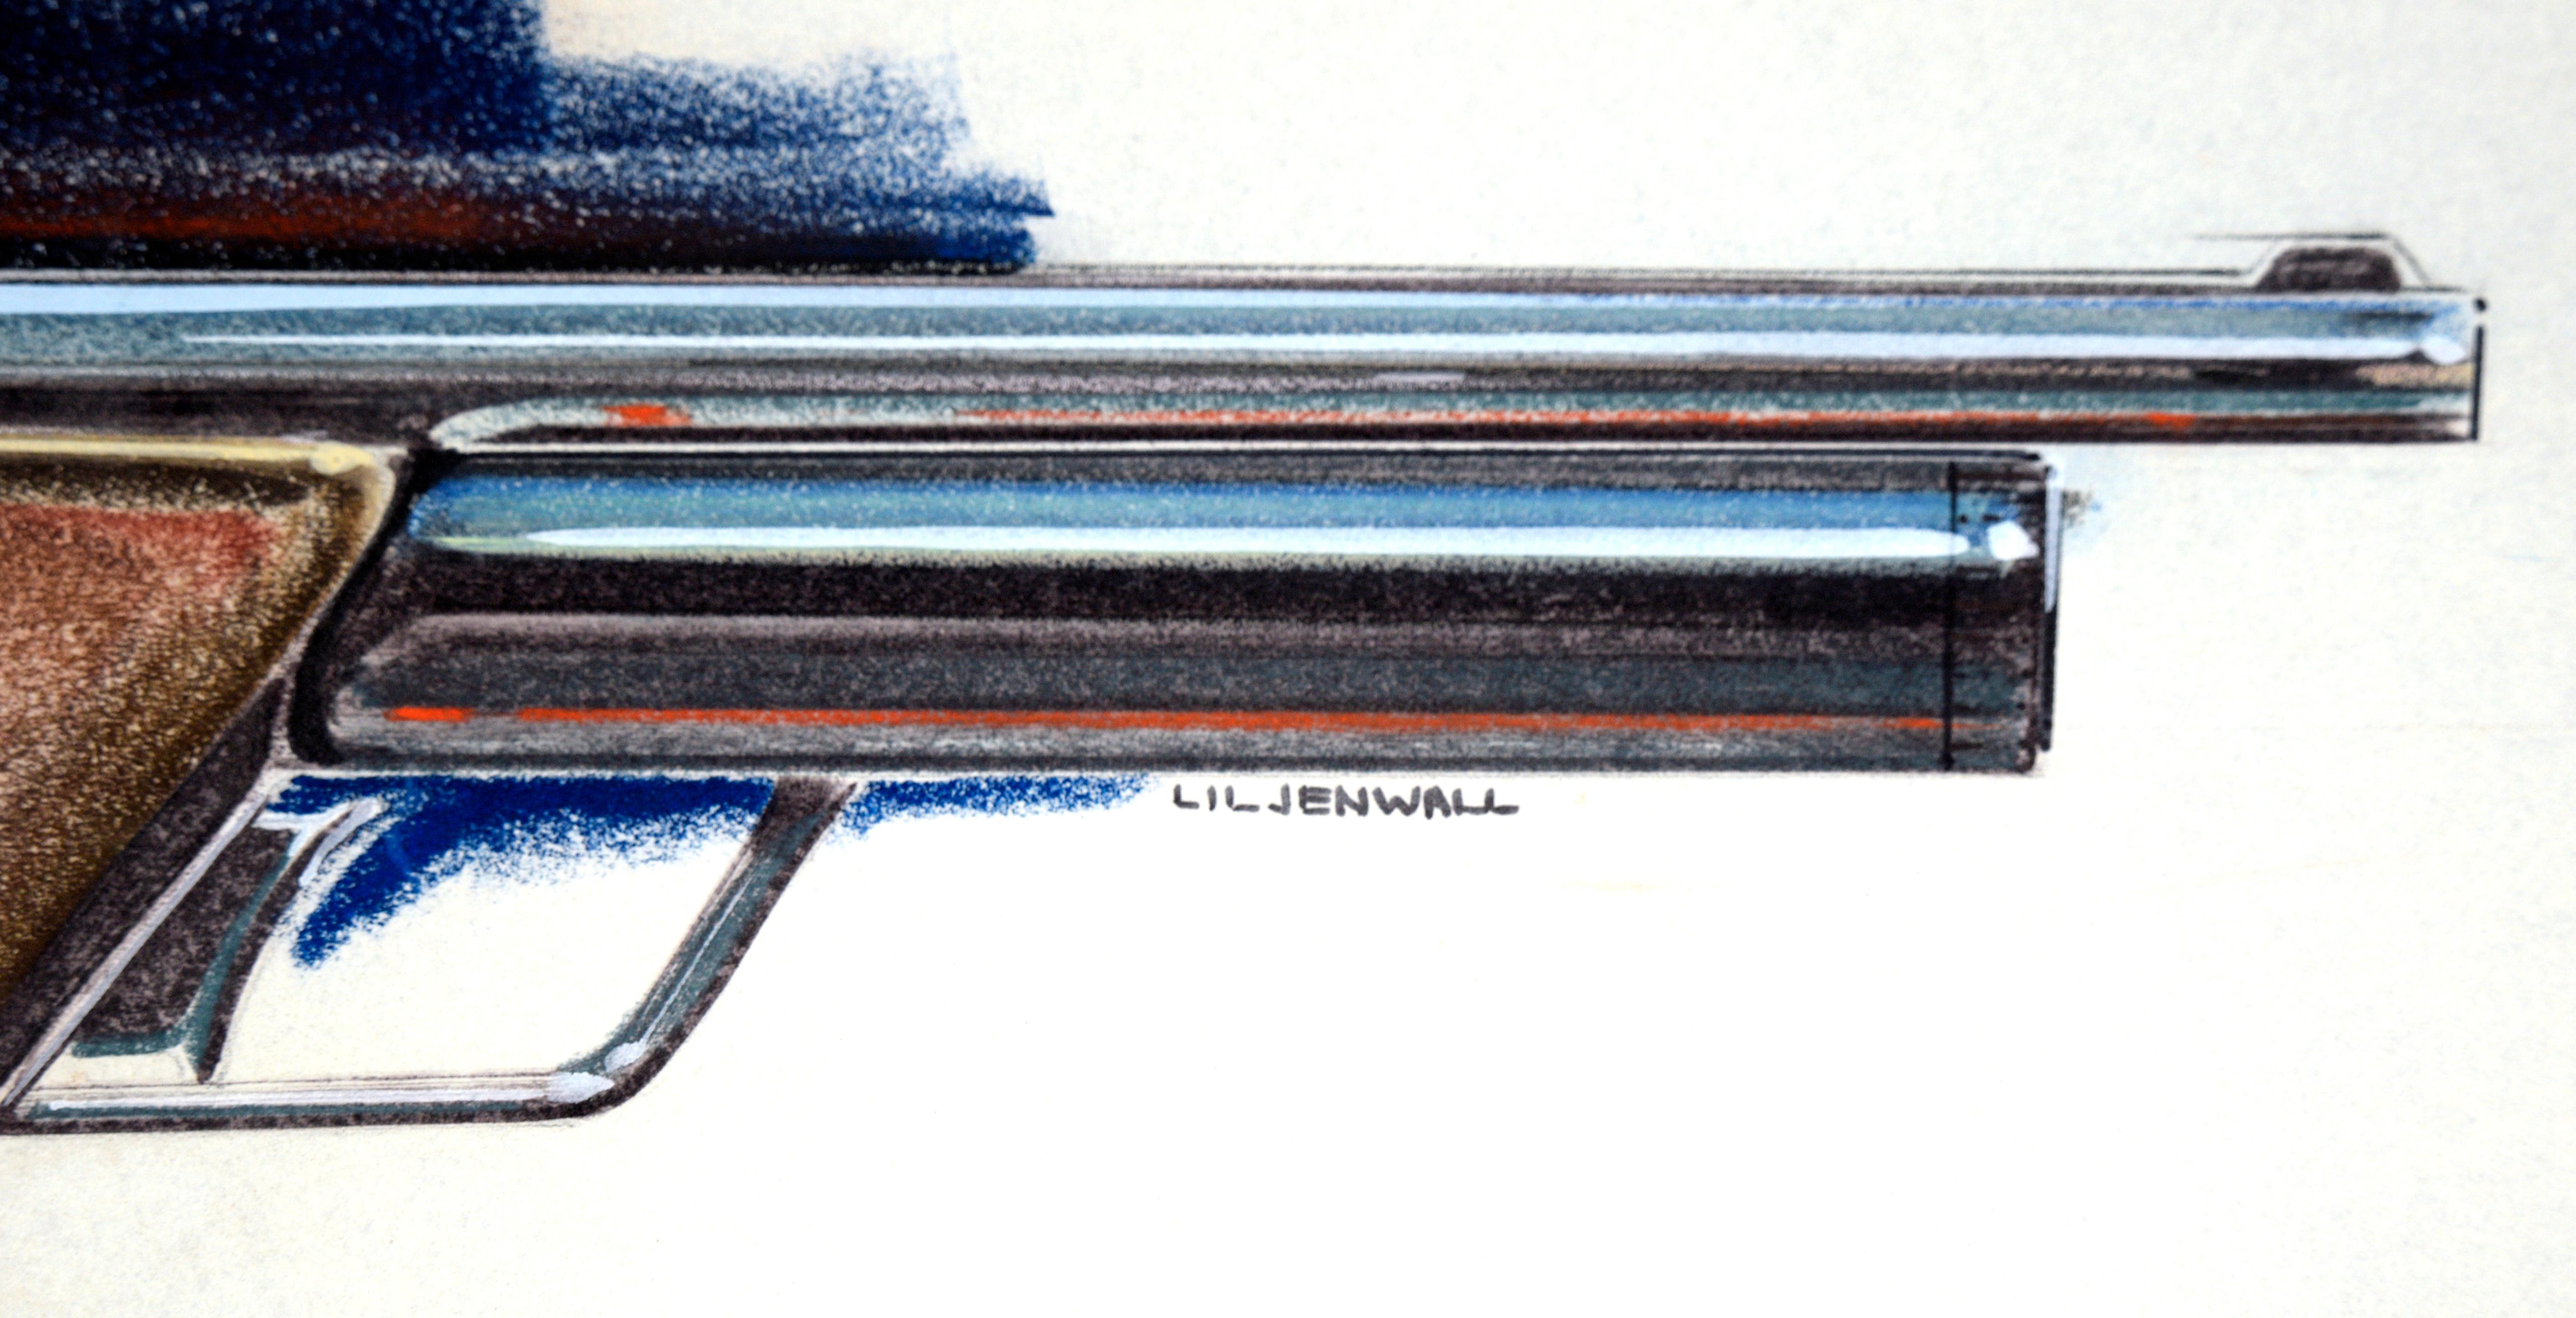 Hahn Air Pistol Design Drawings Pencil - Ink on Paper Designer HP35 calculator - Photorealist Art by Edward T. Liljenwall